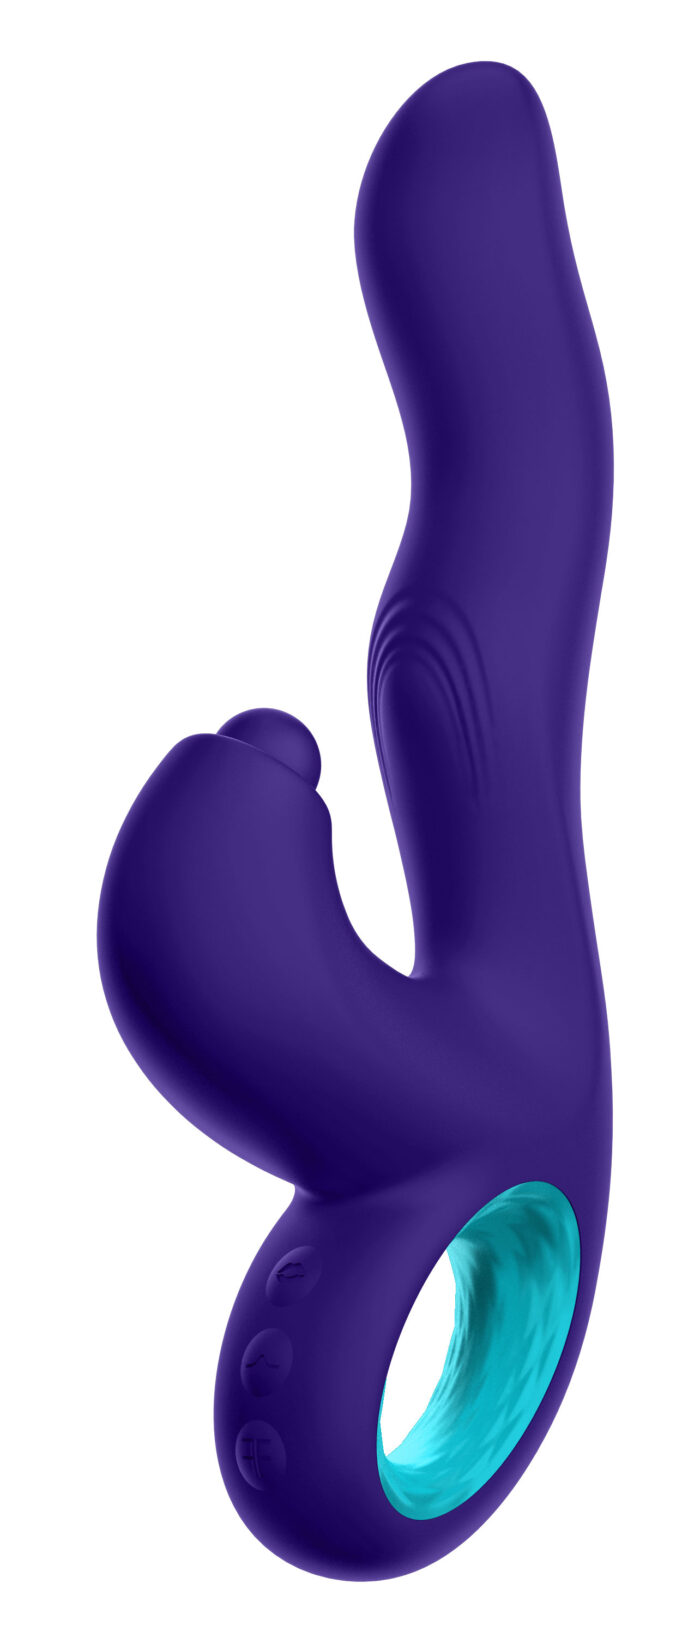 Klio Triple Action Thumping Rabbit Vibrator - Dark Purple